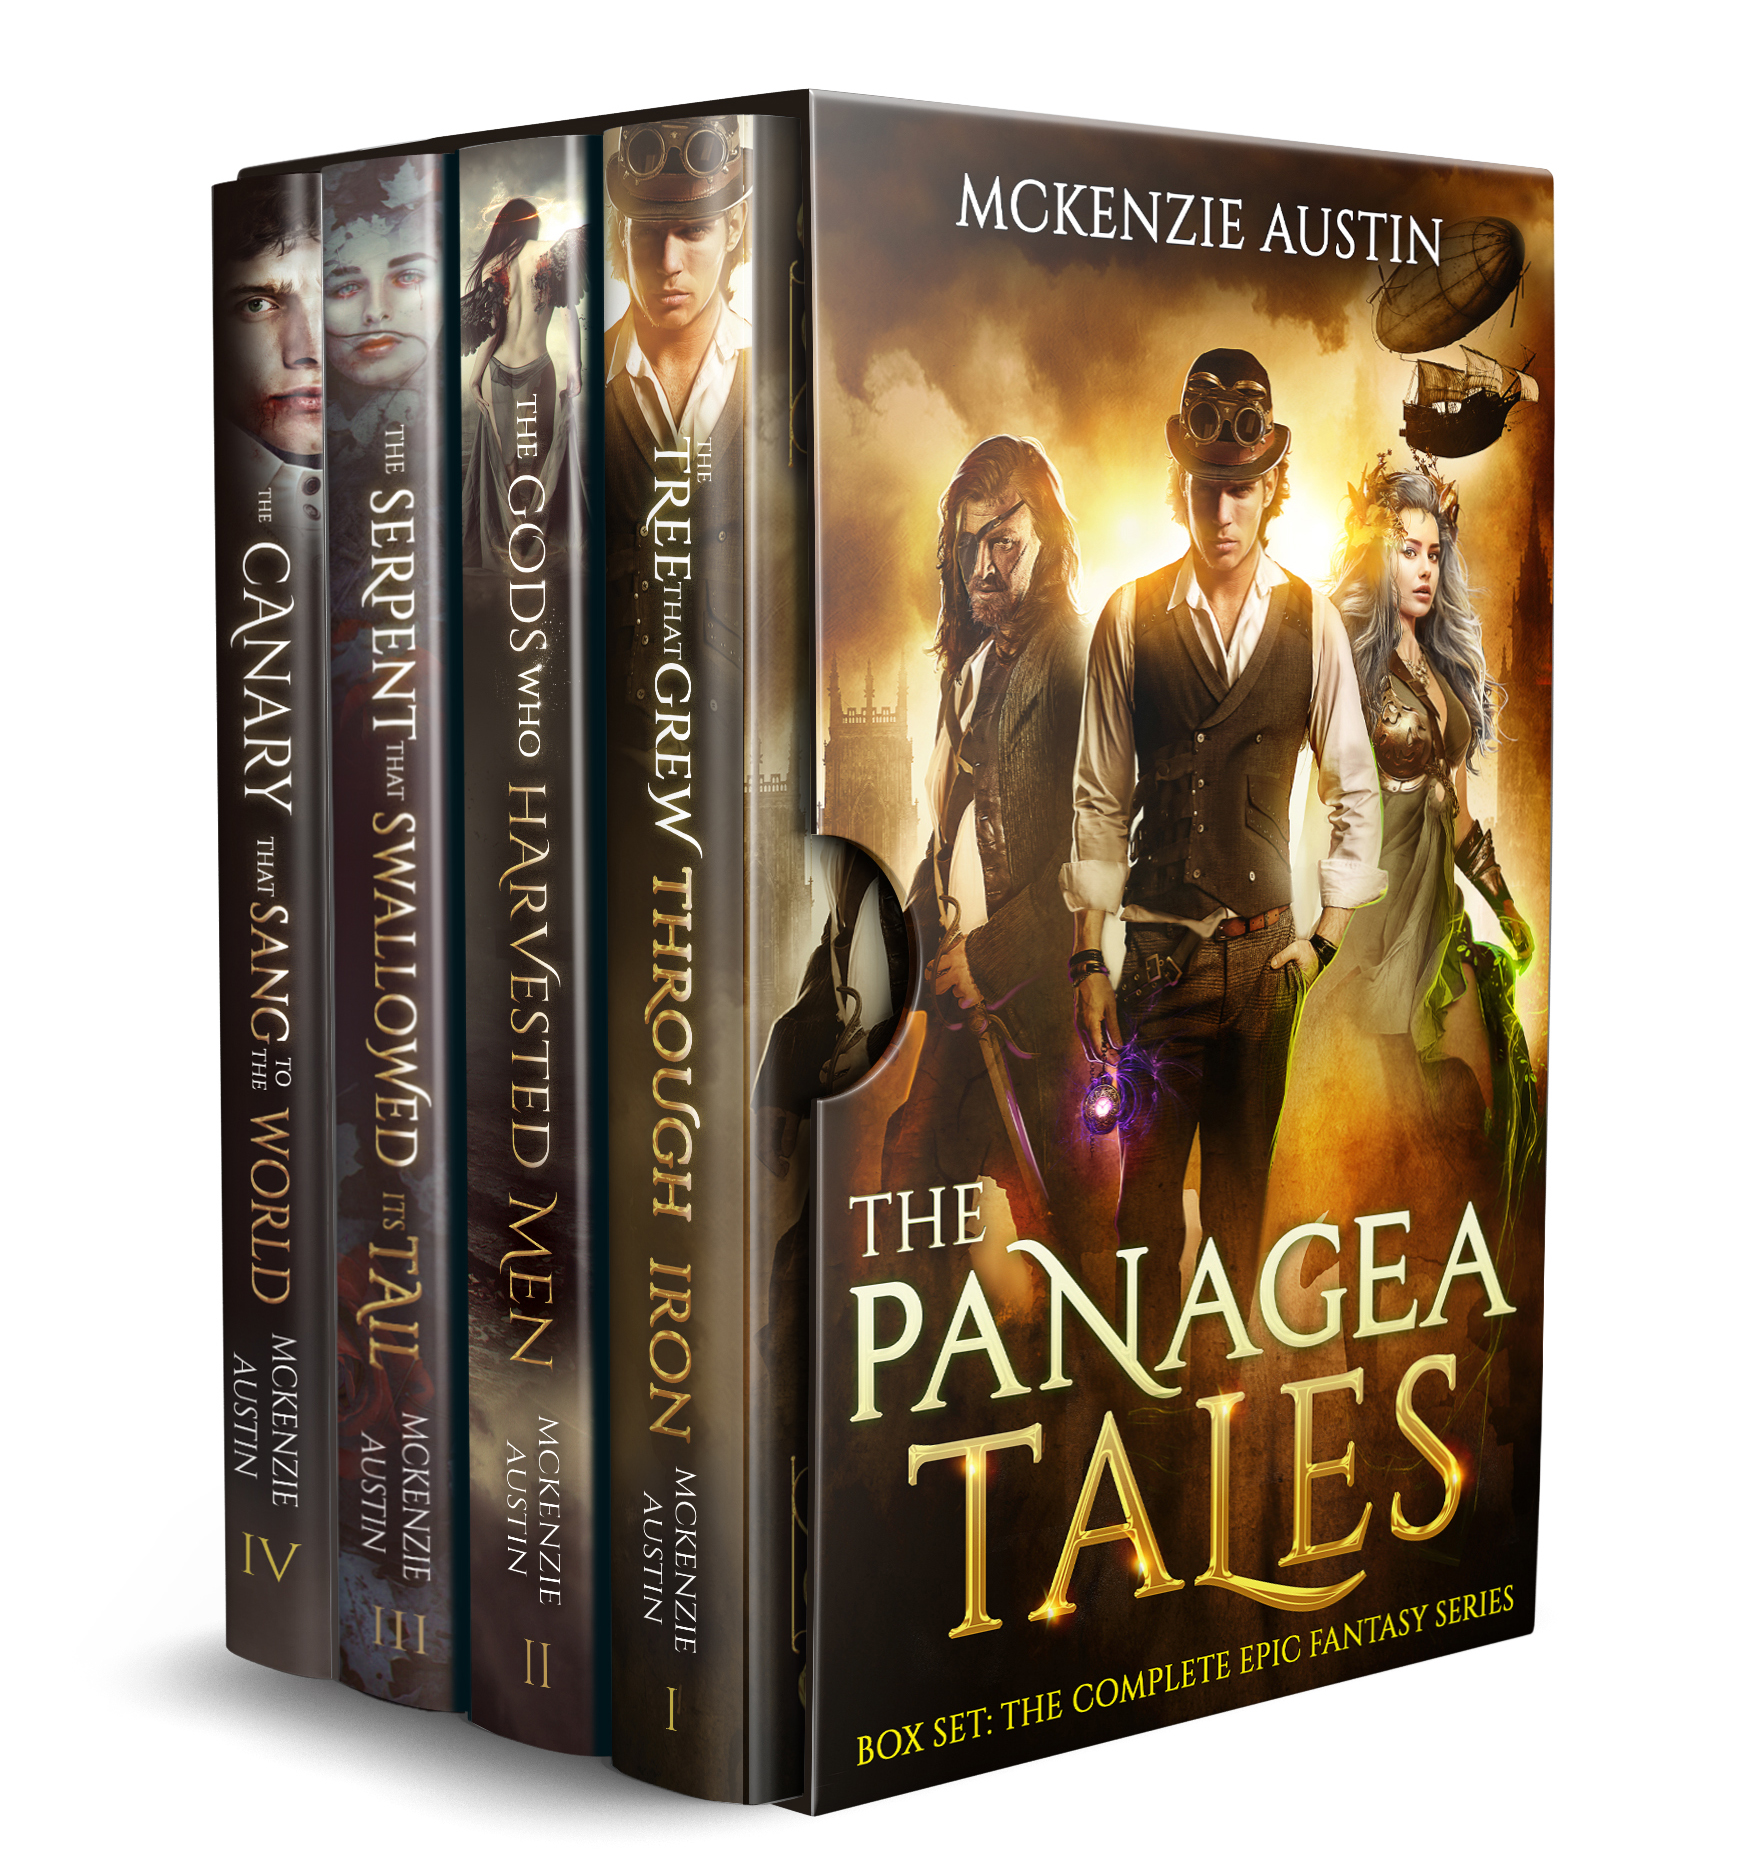 The_Panagea_Tales_Box_Set_The_Complete_Epic_Fantasy_Series_McKenzie_Austin